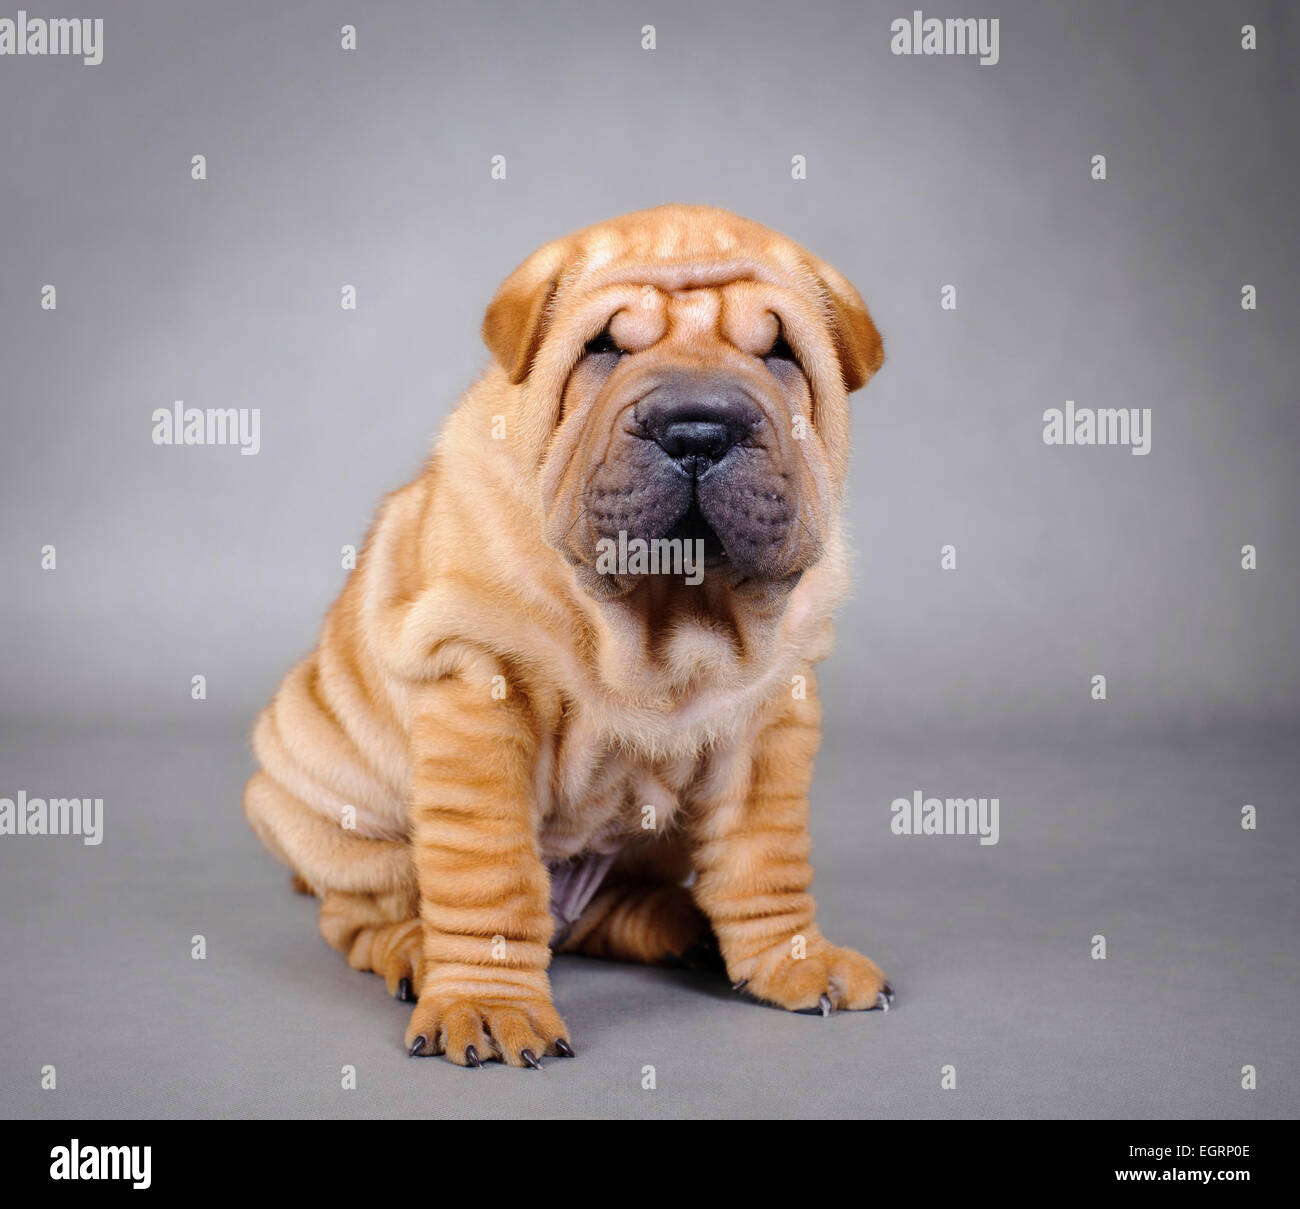 Chinese Shar pei puppy portrait Stock Photo - Alamy